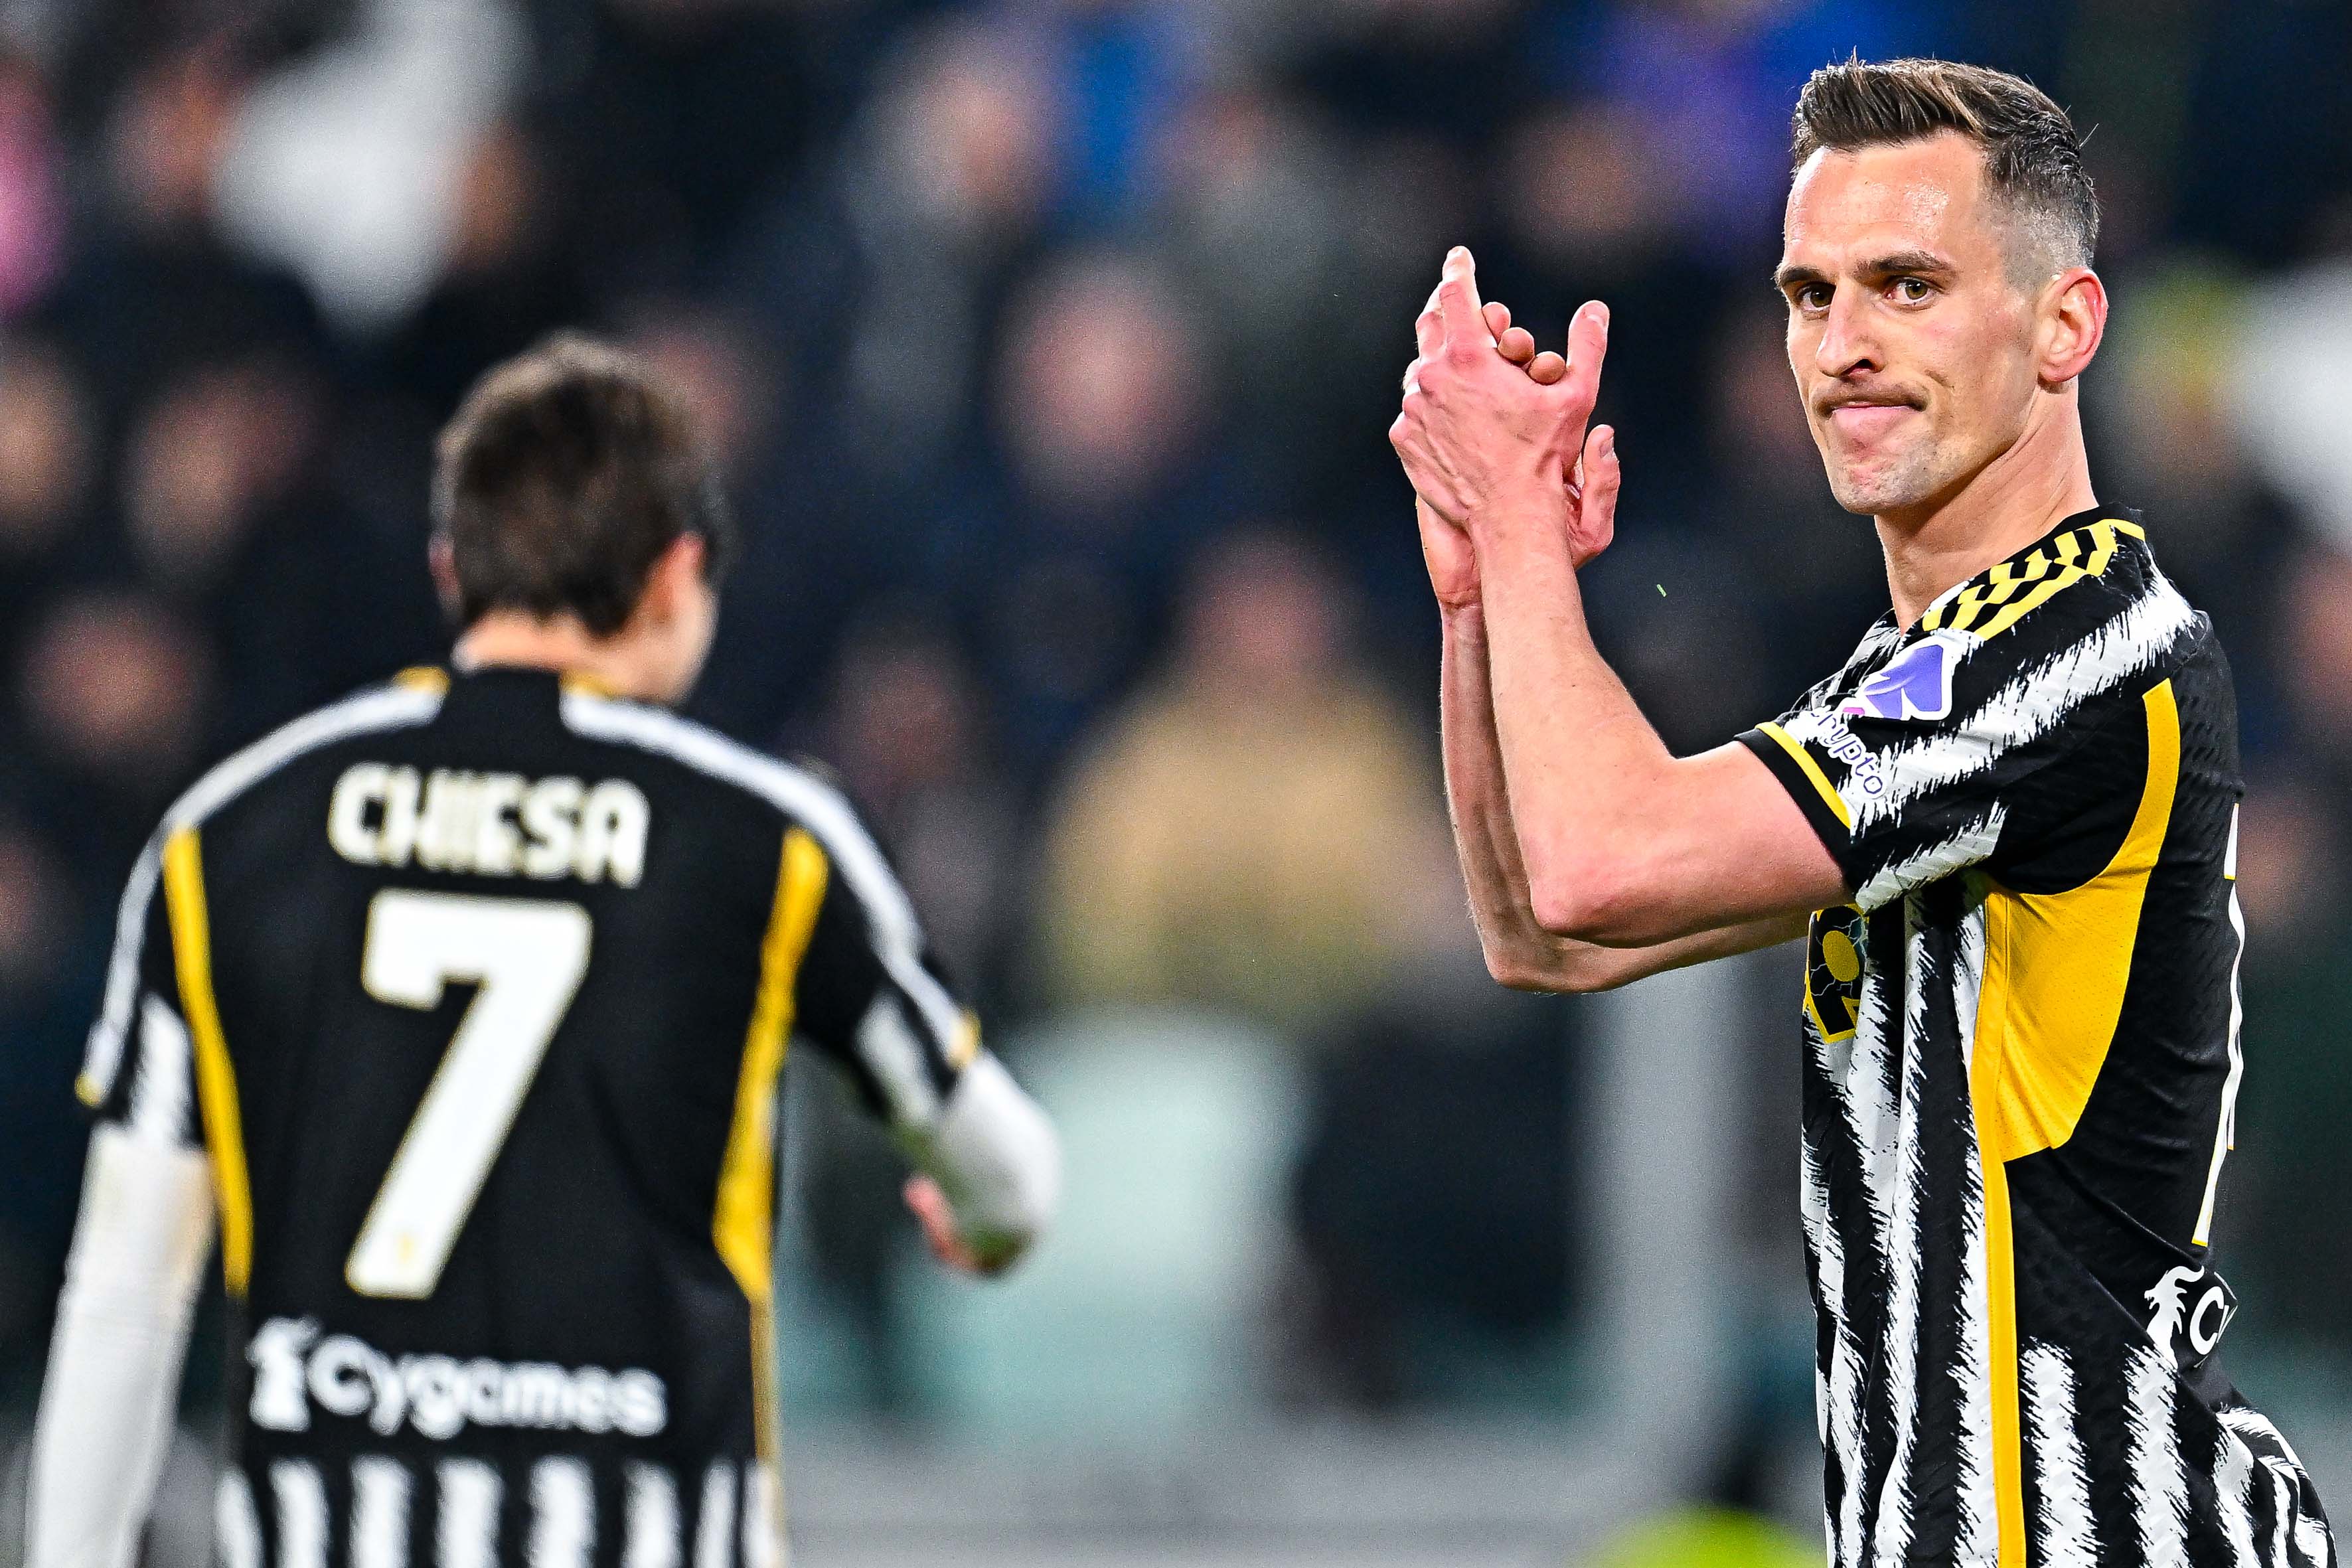 Serie A: Juventus vs Udinese 0-1, Allegri Akui Ini Masa Tricky